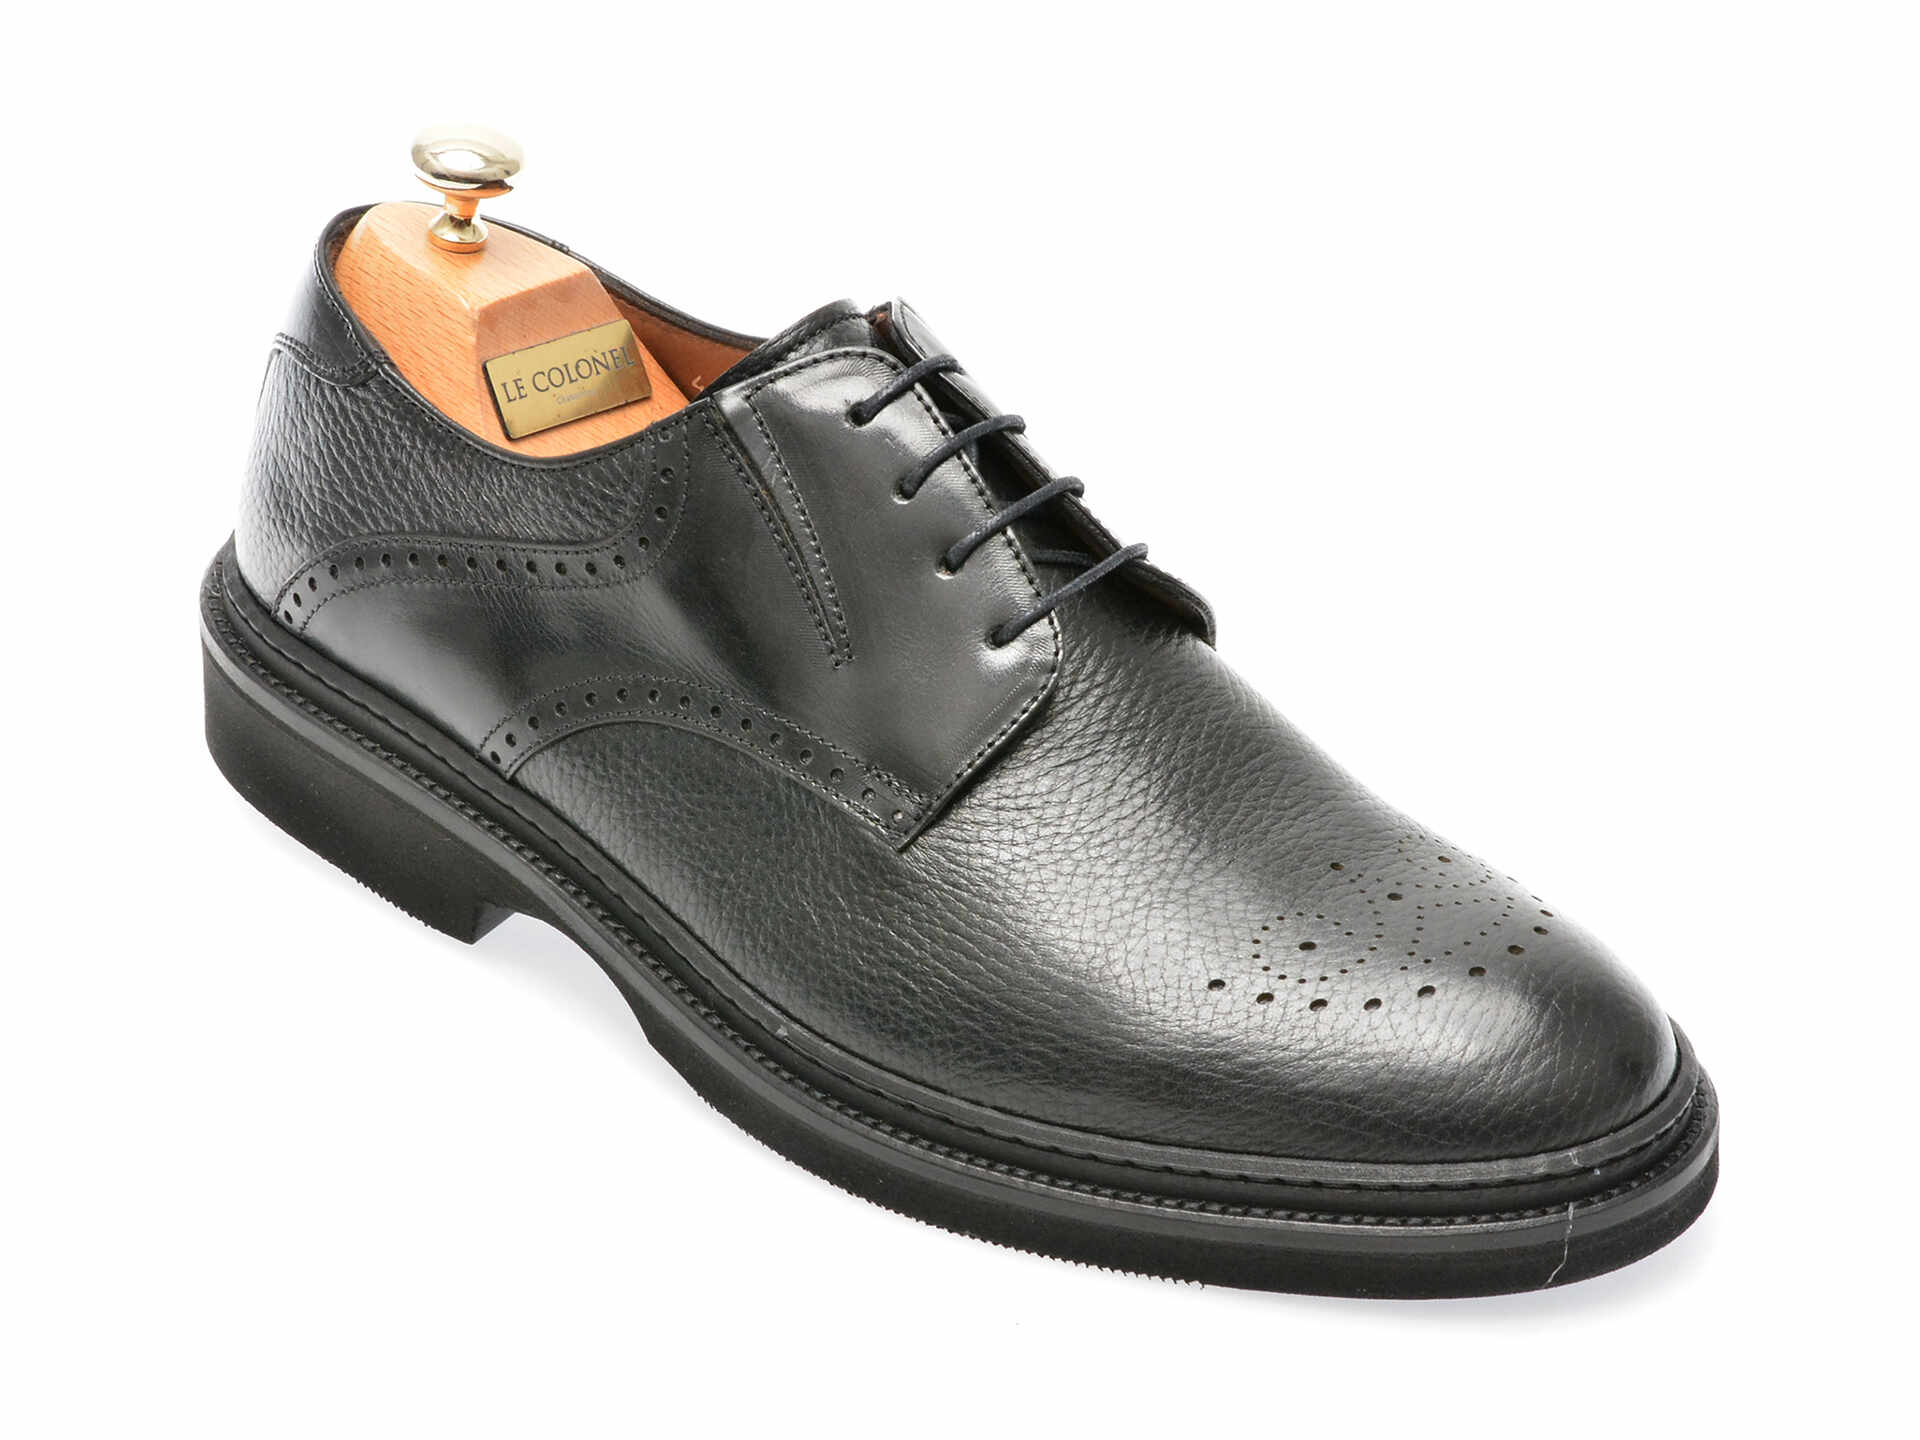 Pantofi LE COLONEL negri, 61722, din piele naturala